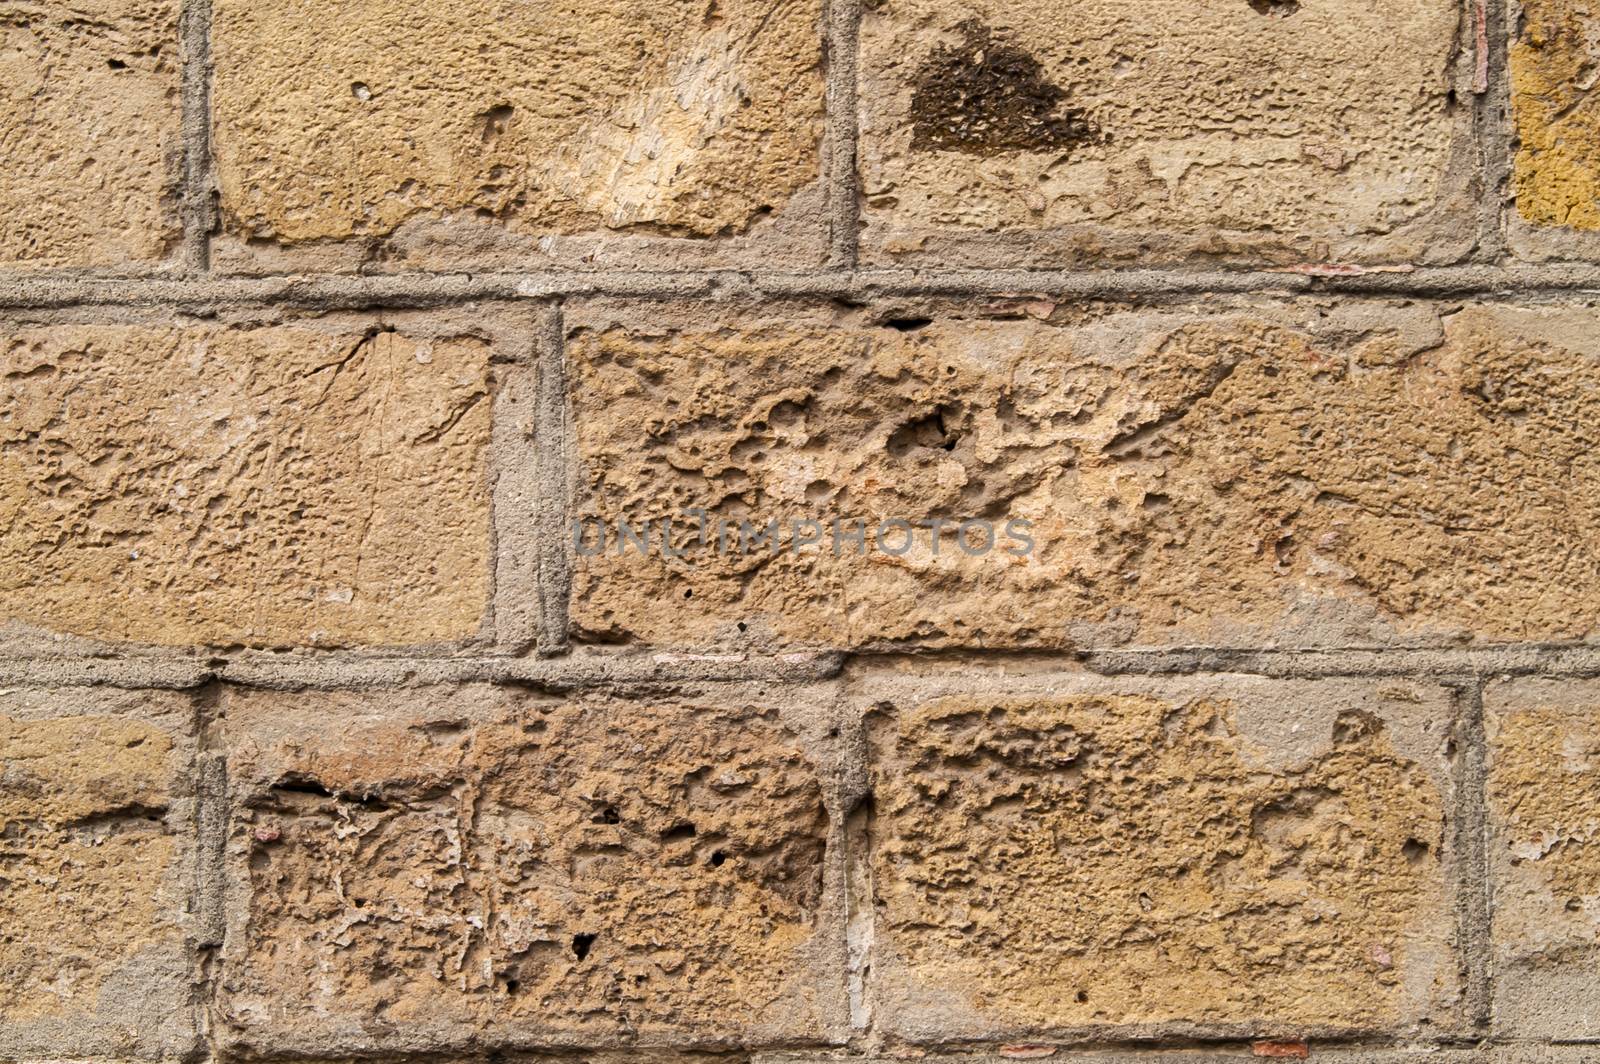 A piece of masonry brick wall texture